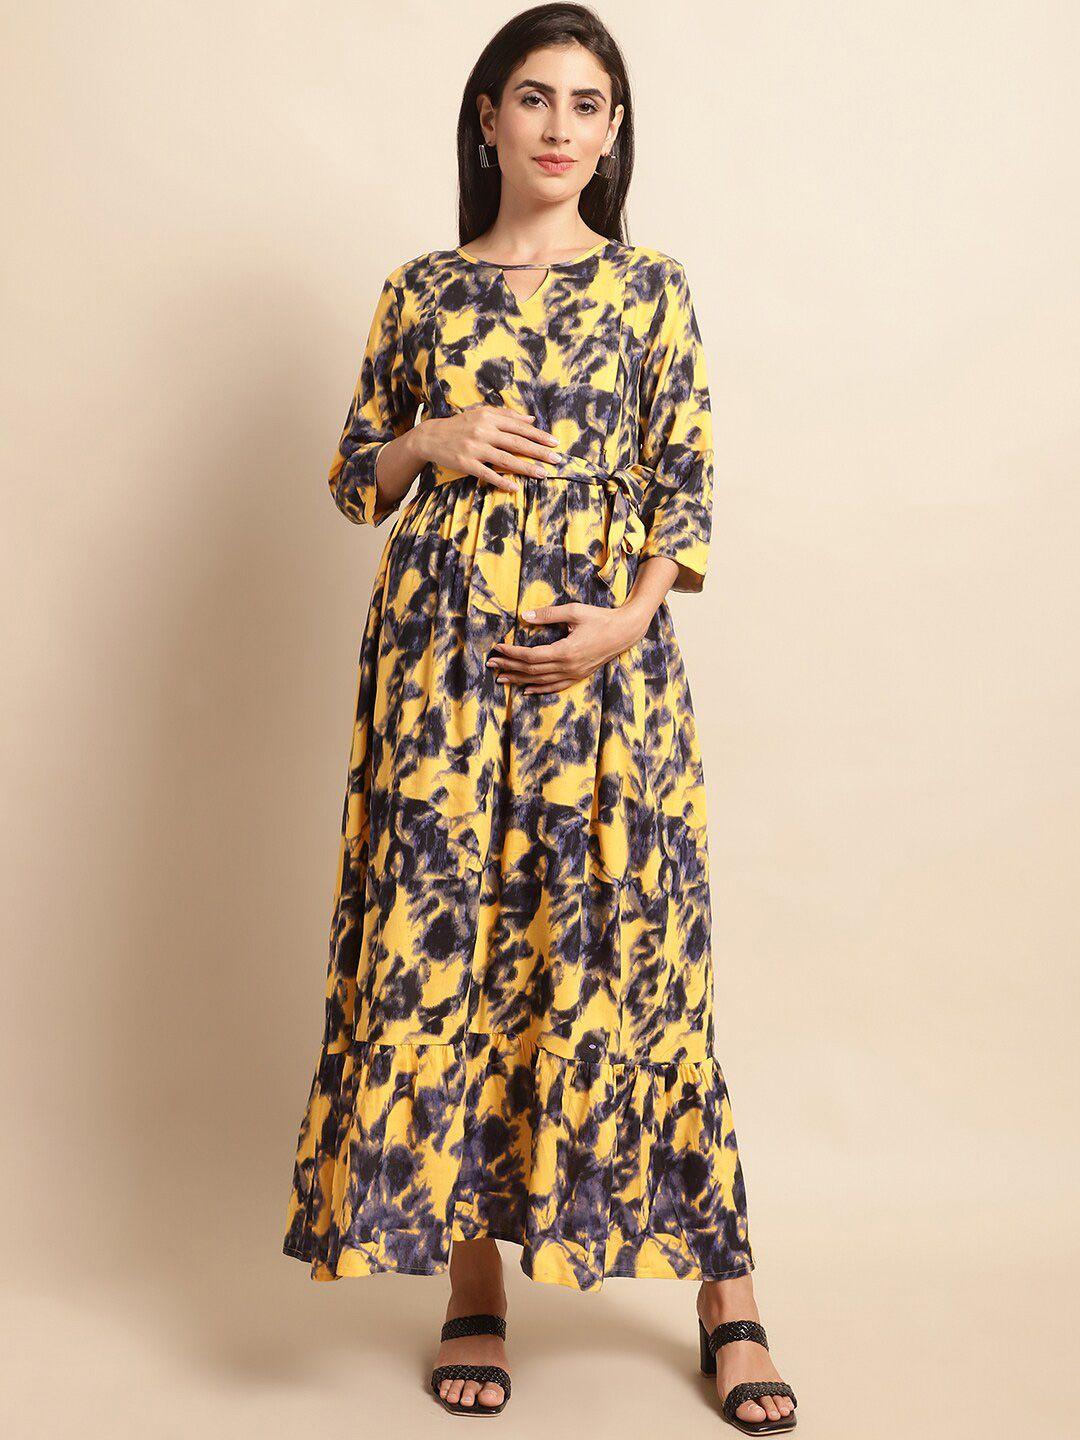 frempy yellow floral print maternity maxi dress